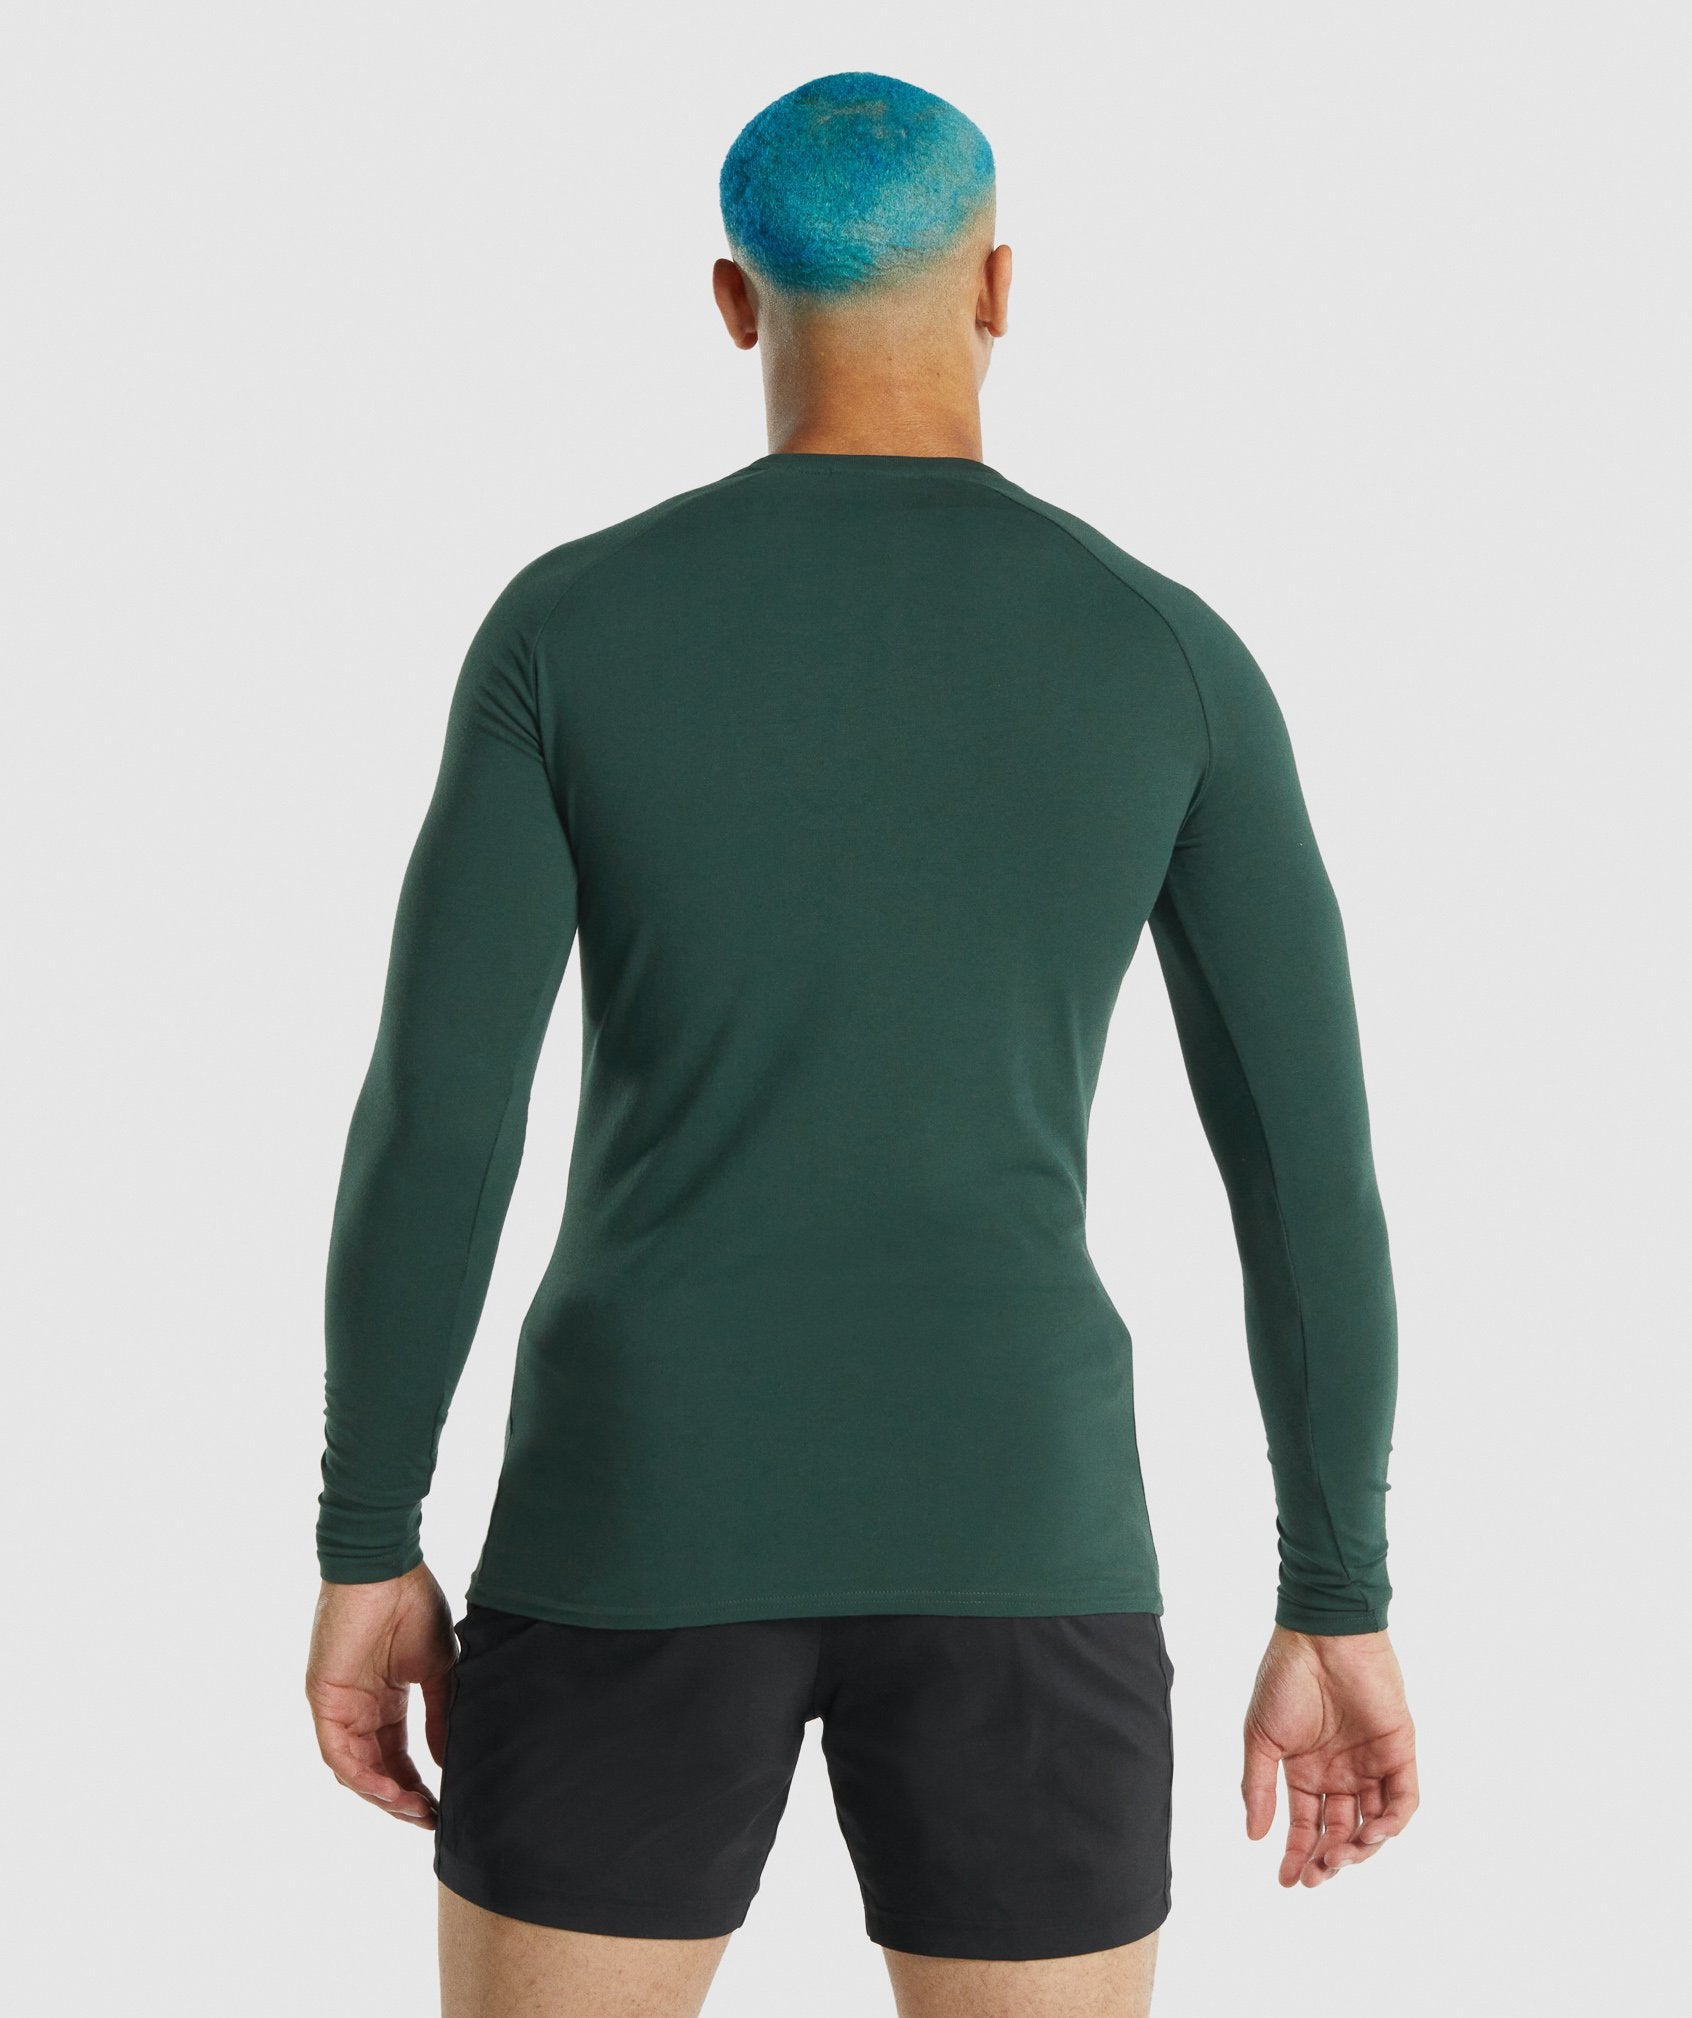 Apollo Long Sleeve T-Shirt in Dark Green - view 3